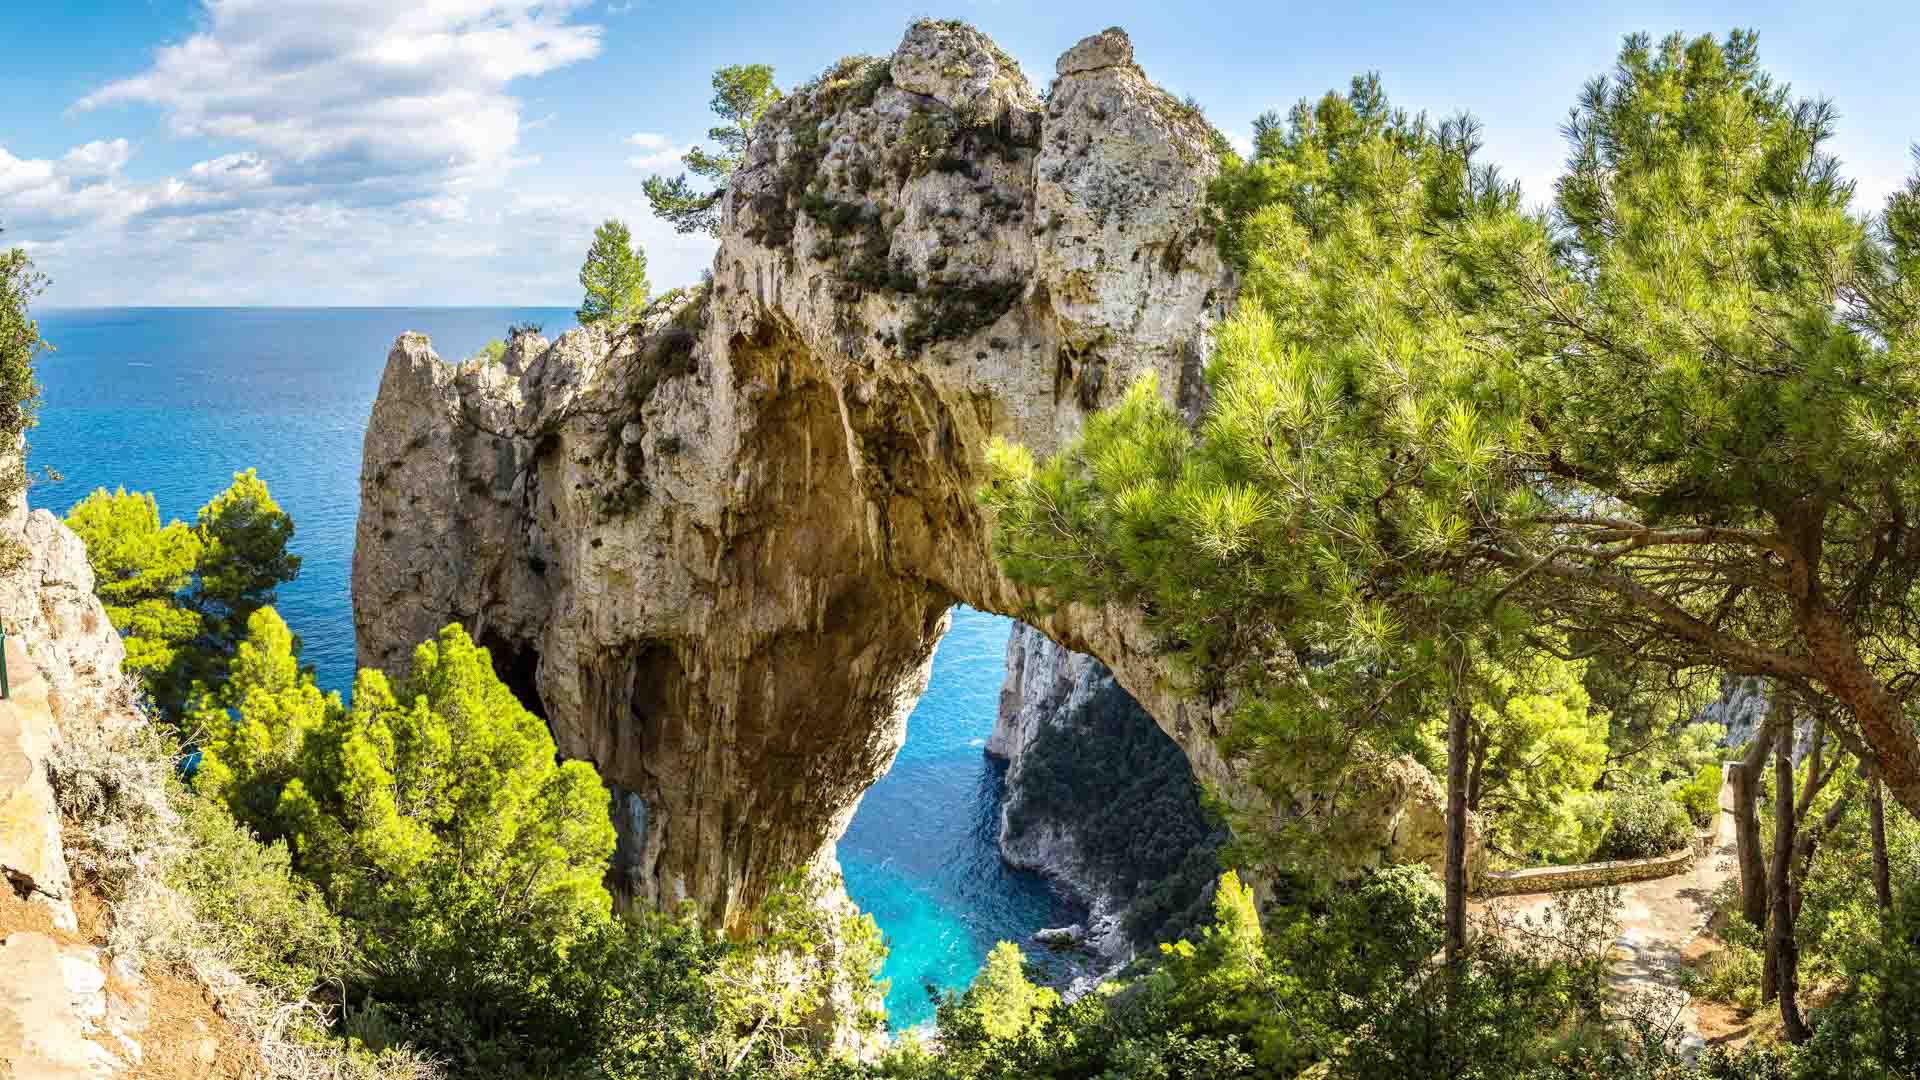 https://www.leisure-italy.com/wp-content/uploads/2018/04/A-Day-in-Capri-Capri-3.jpg